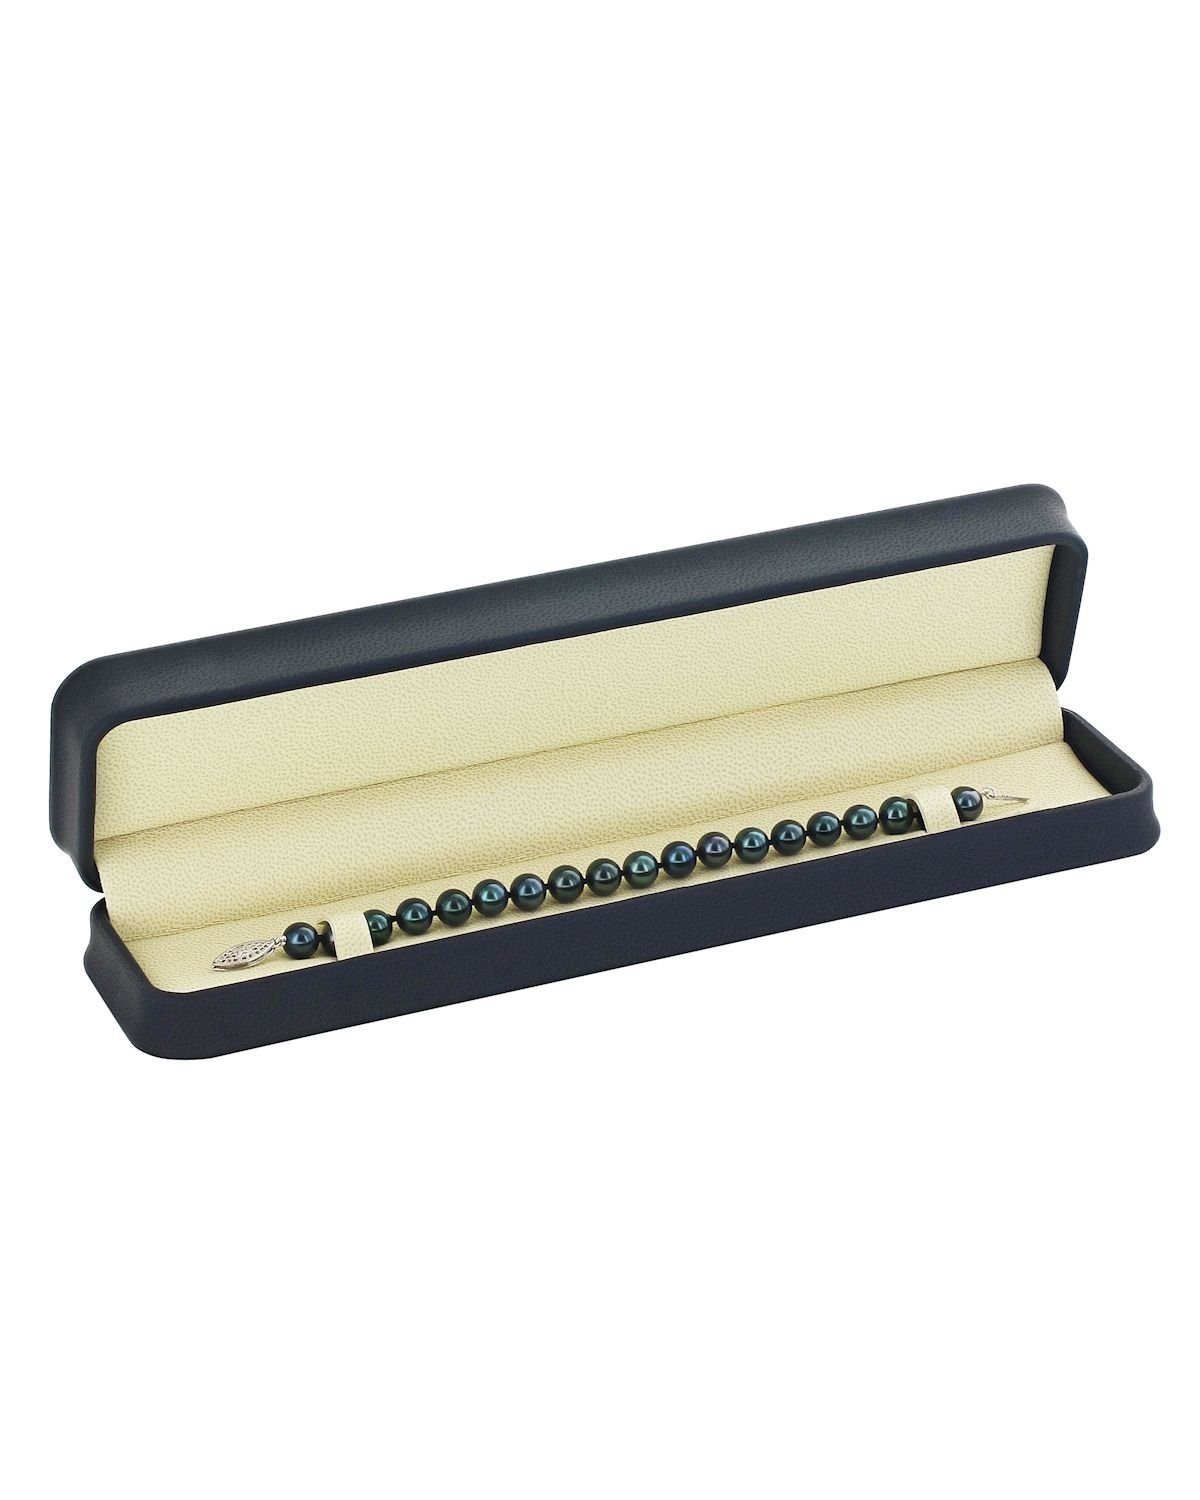 8.0-8.5mm Akoya Black Pearl Bracelet- Choose Your Quality - Fourth Image